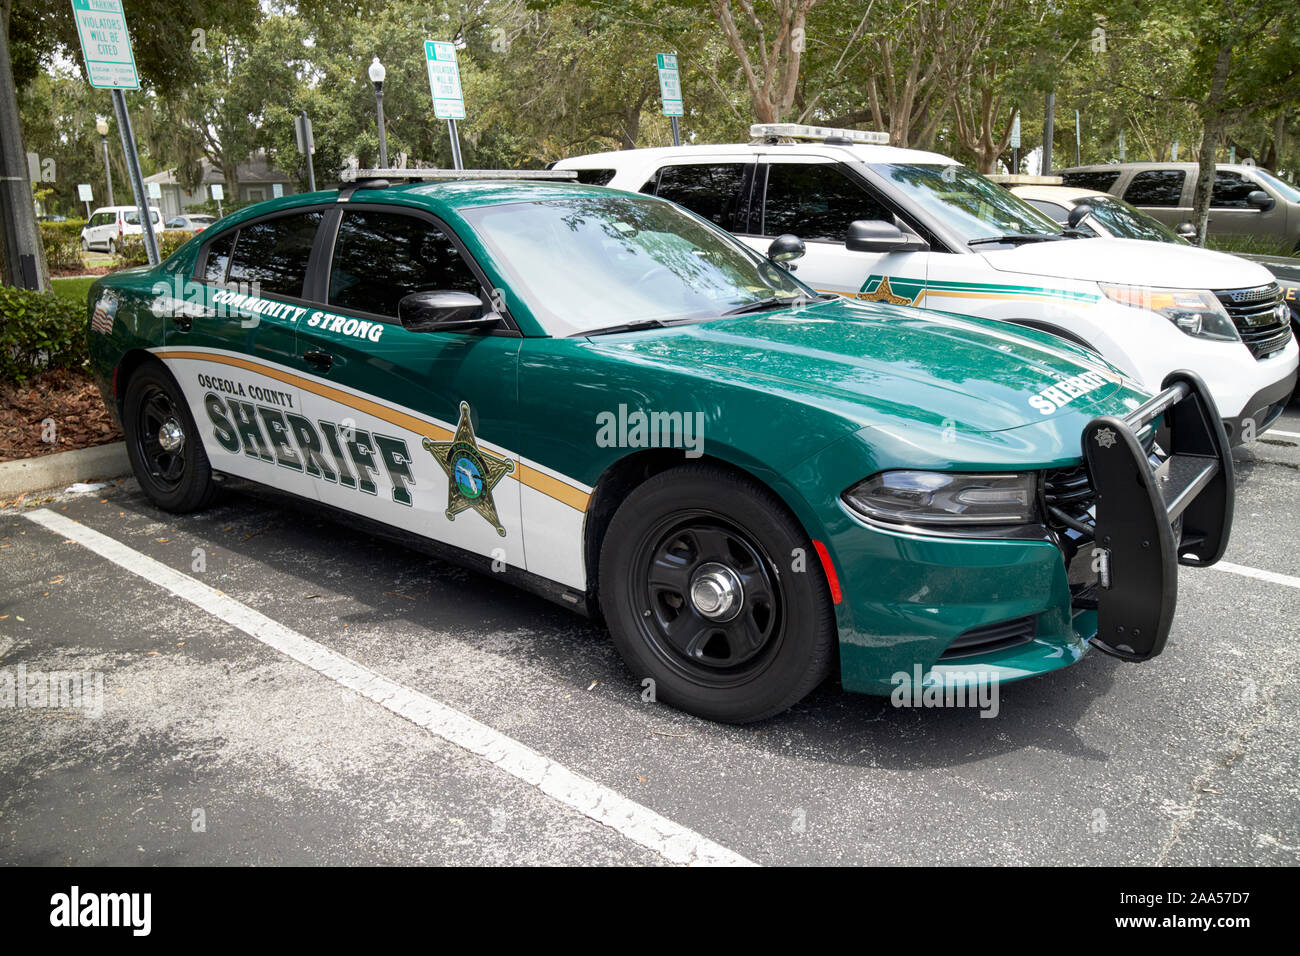 osceola county sheriff department dodge charger patrol vehicle suv florida usa Stock Photo